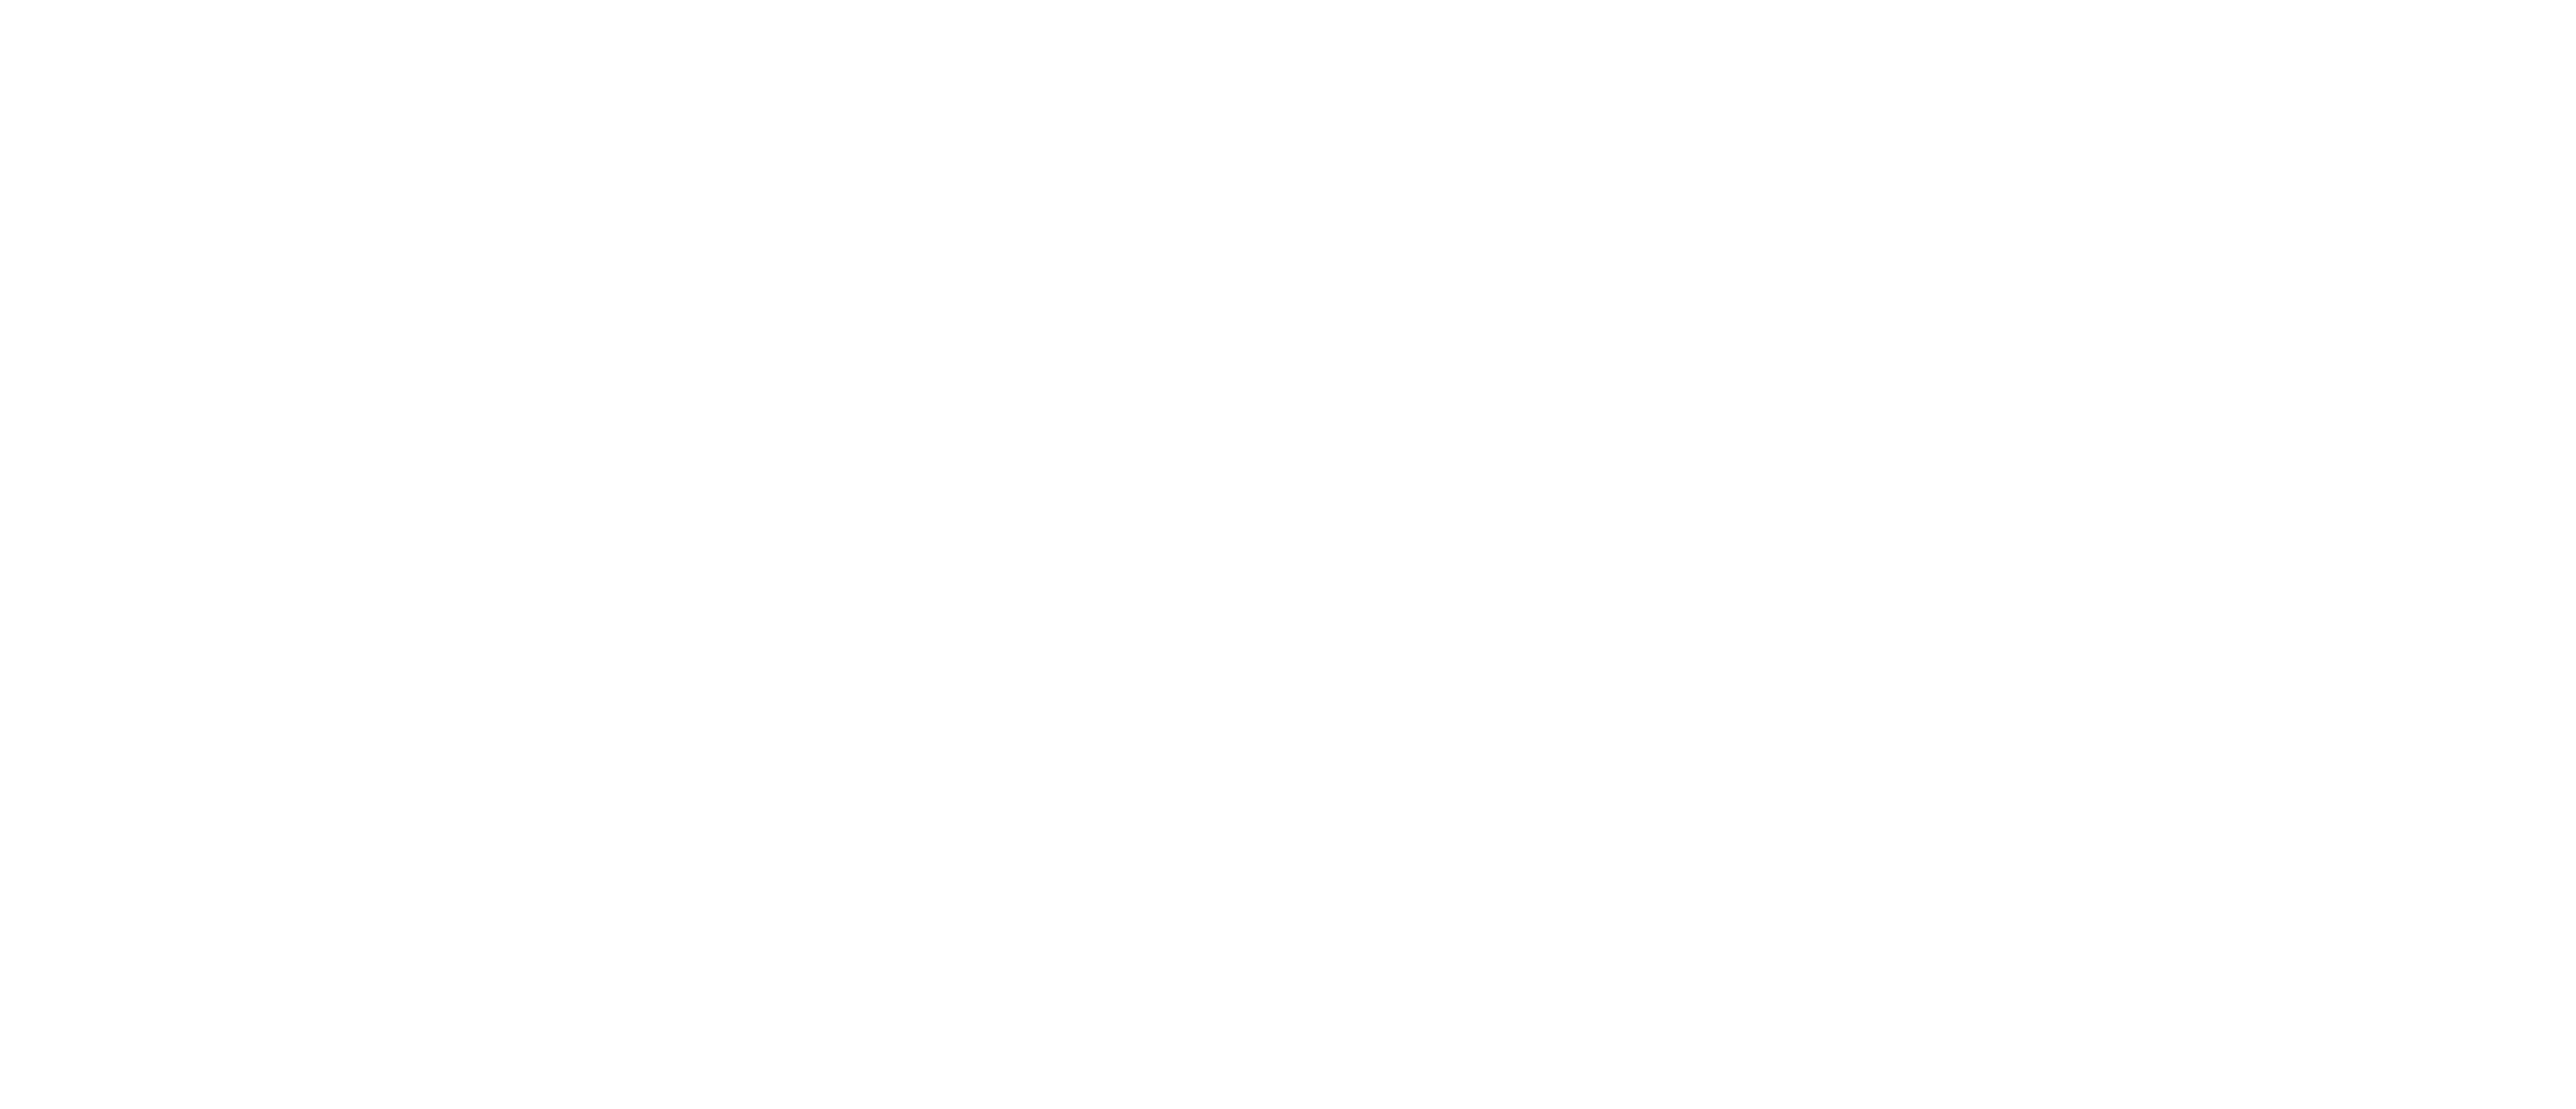 The Gabarron Foundation